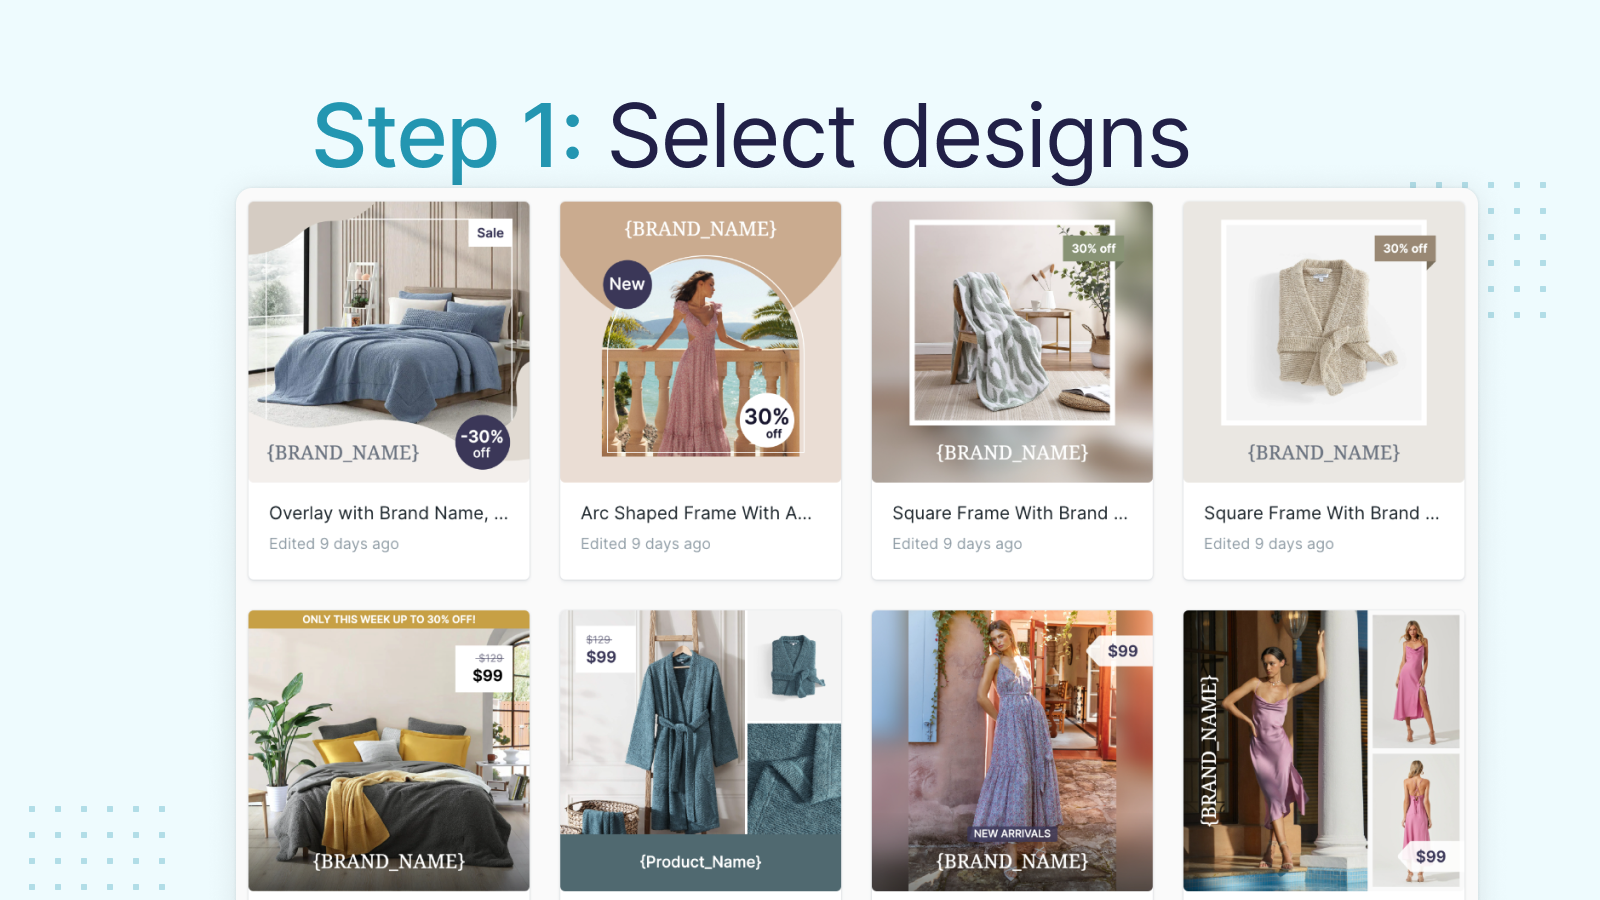 Step 1: Select designs